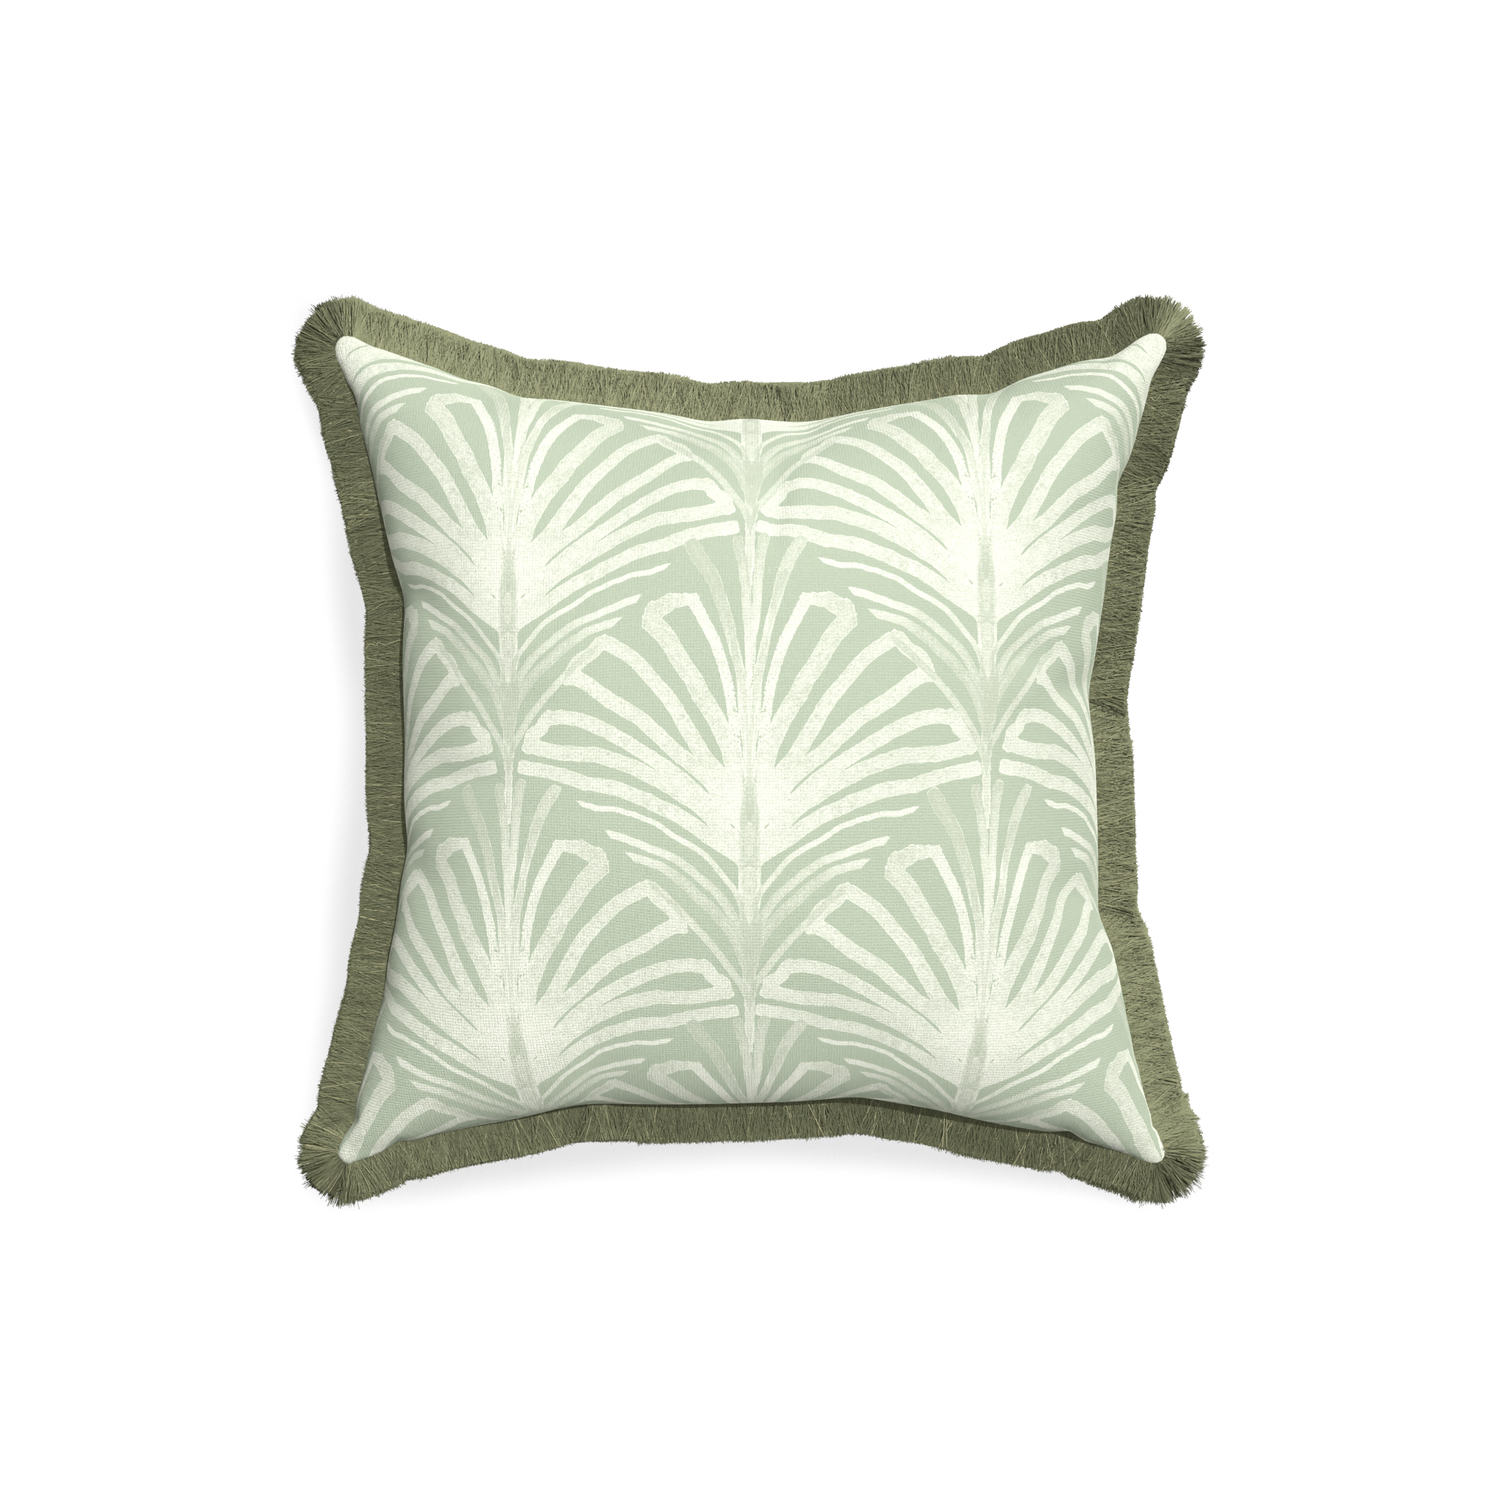 18-square suzy sage custom pillow with sage fringe on white background